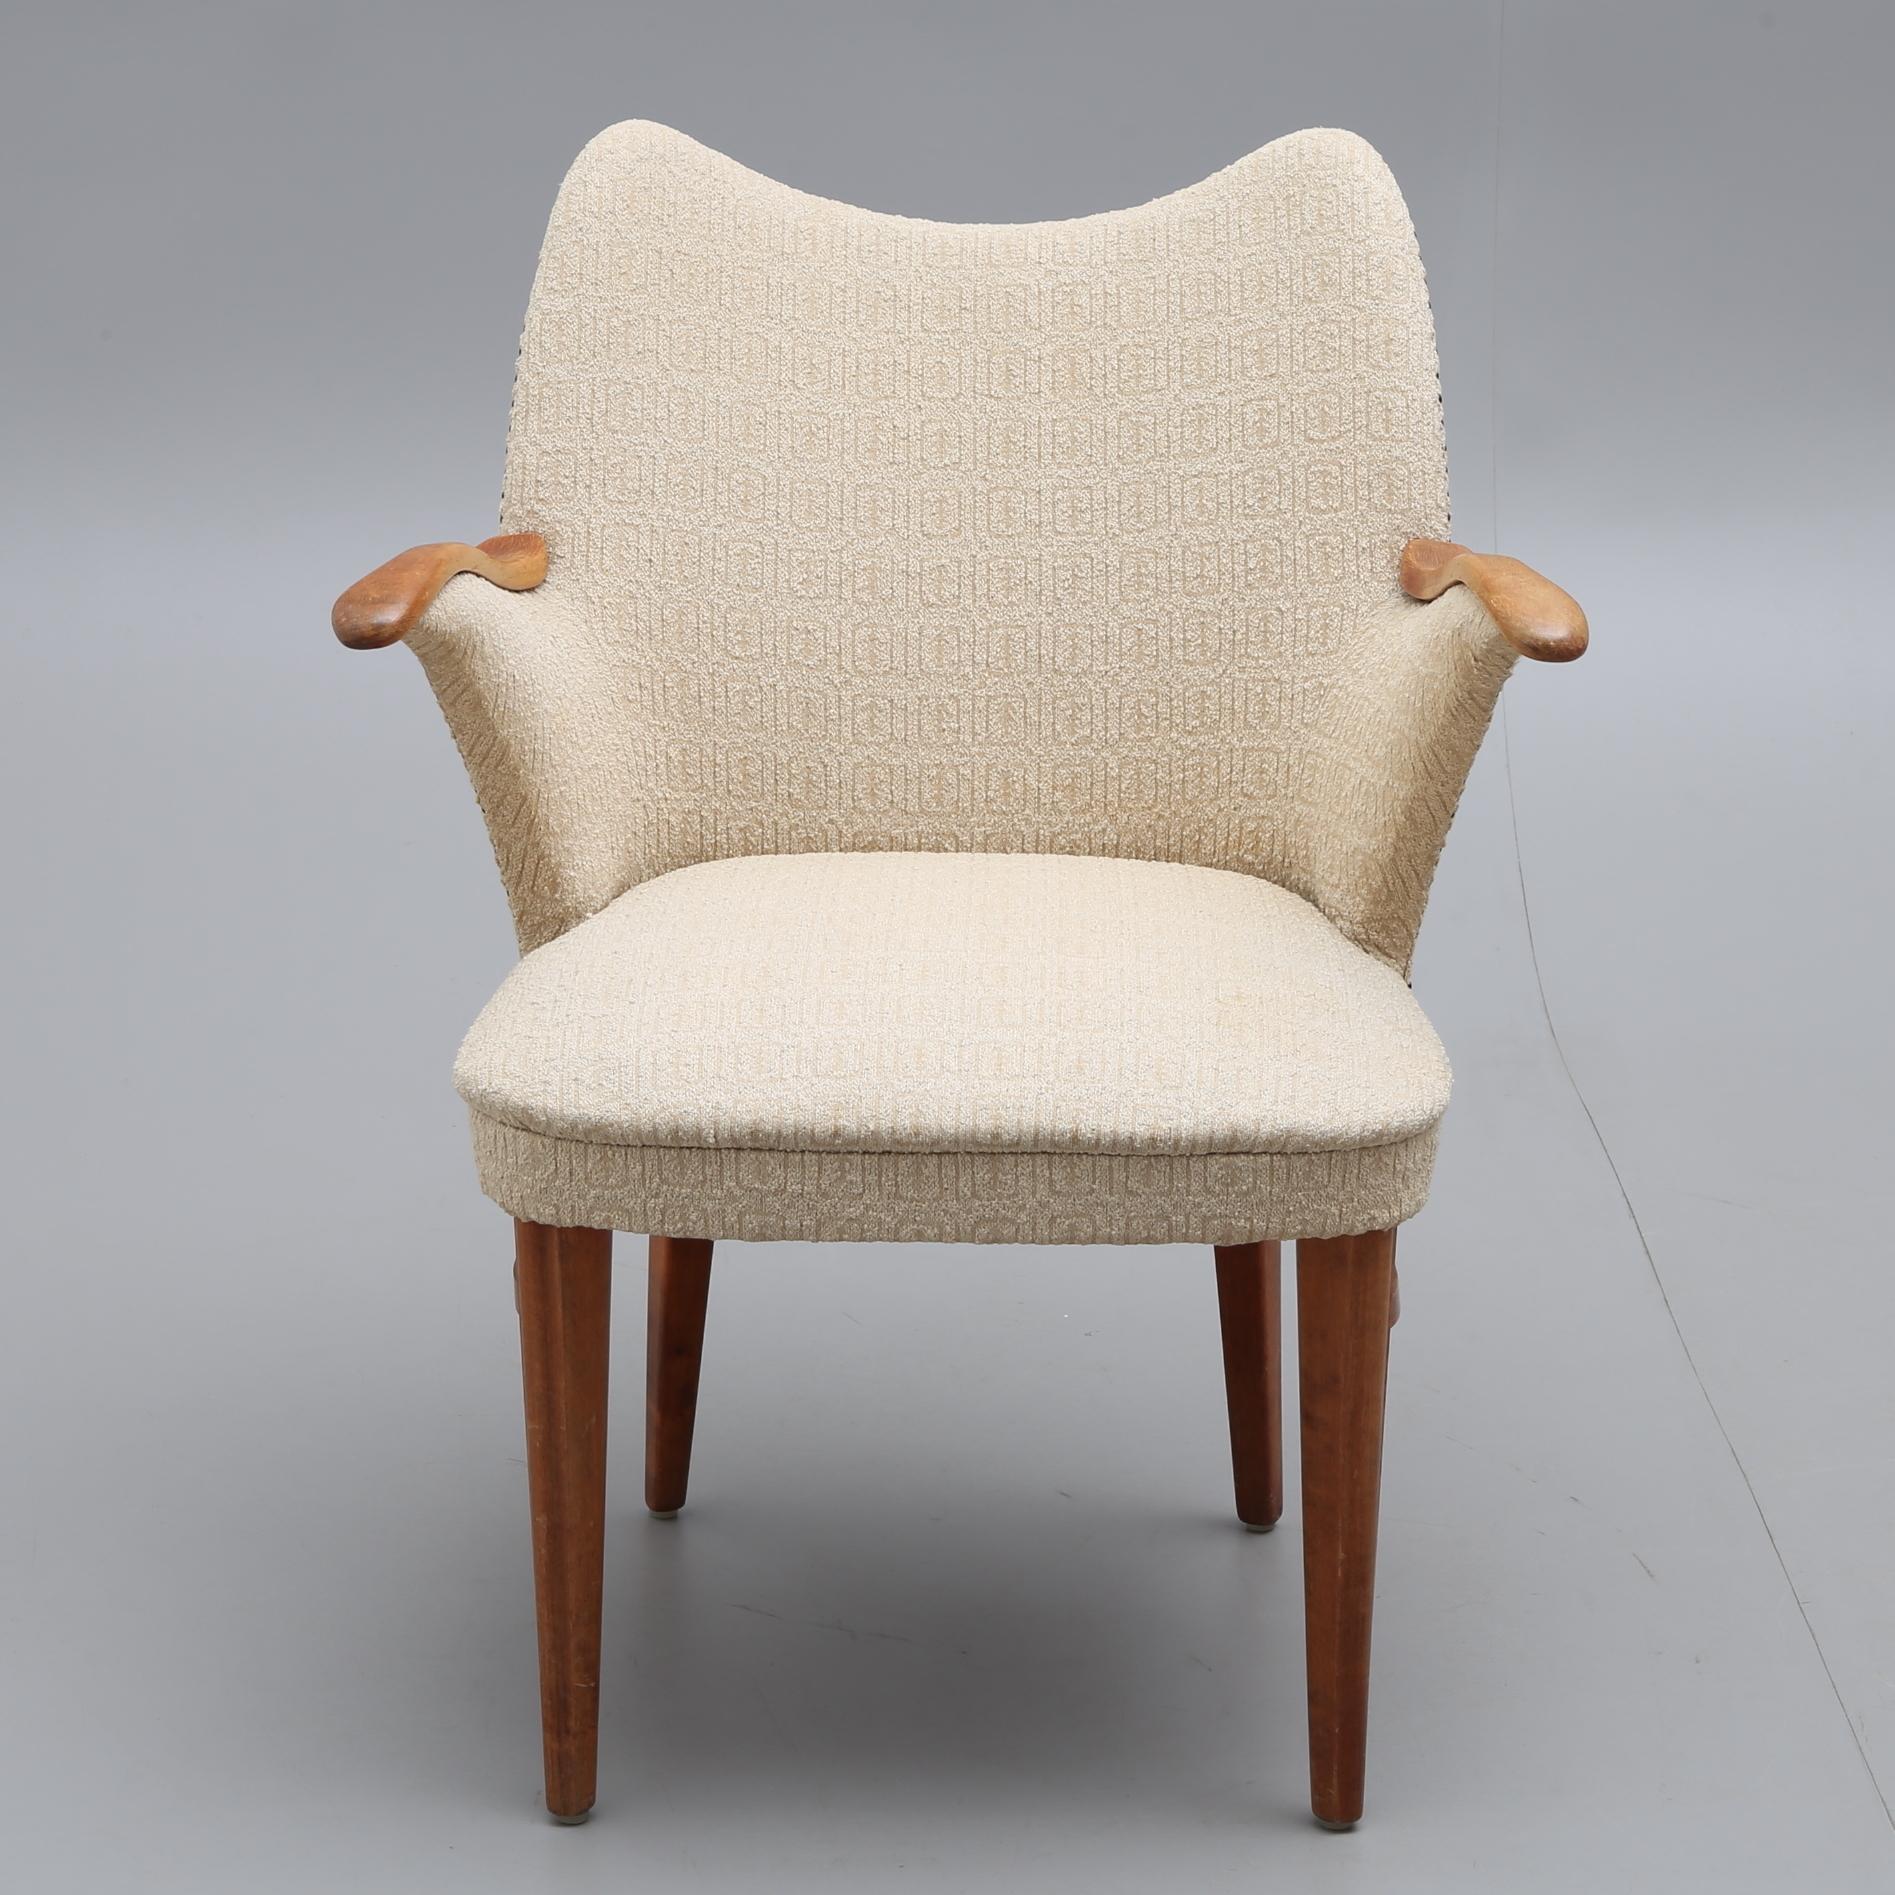 Midcentury armchair, design and produced in Scandinavia, circa 1940.